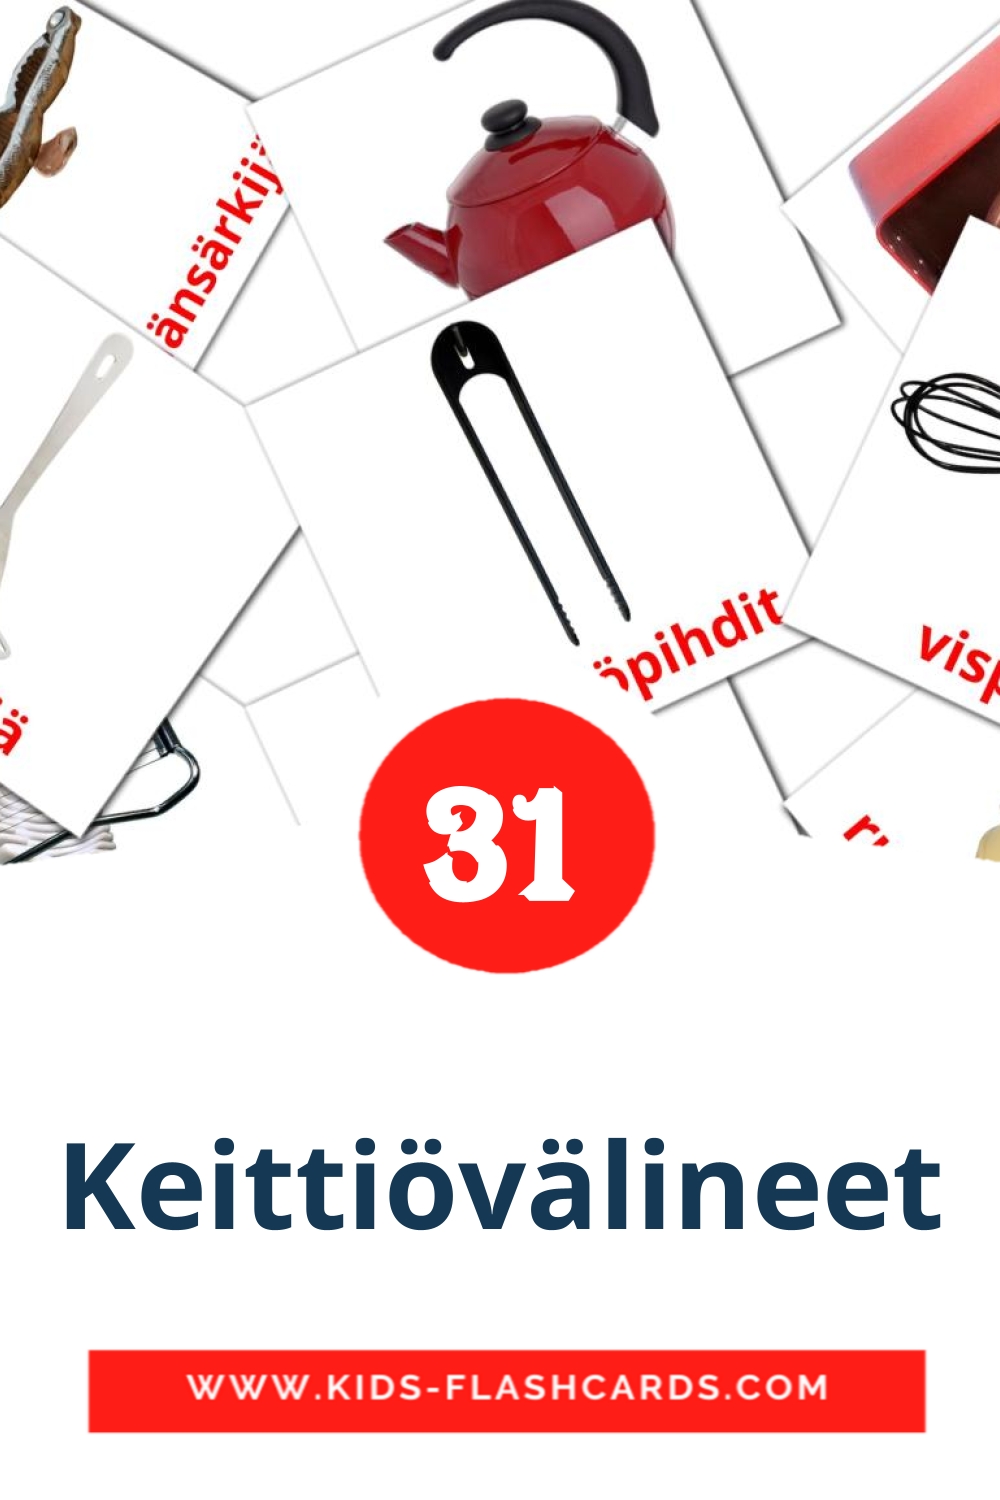 Keittiövälineet на финском для Детского Сада (31 карточка)